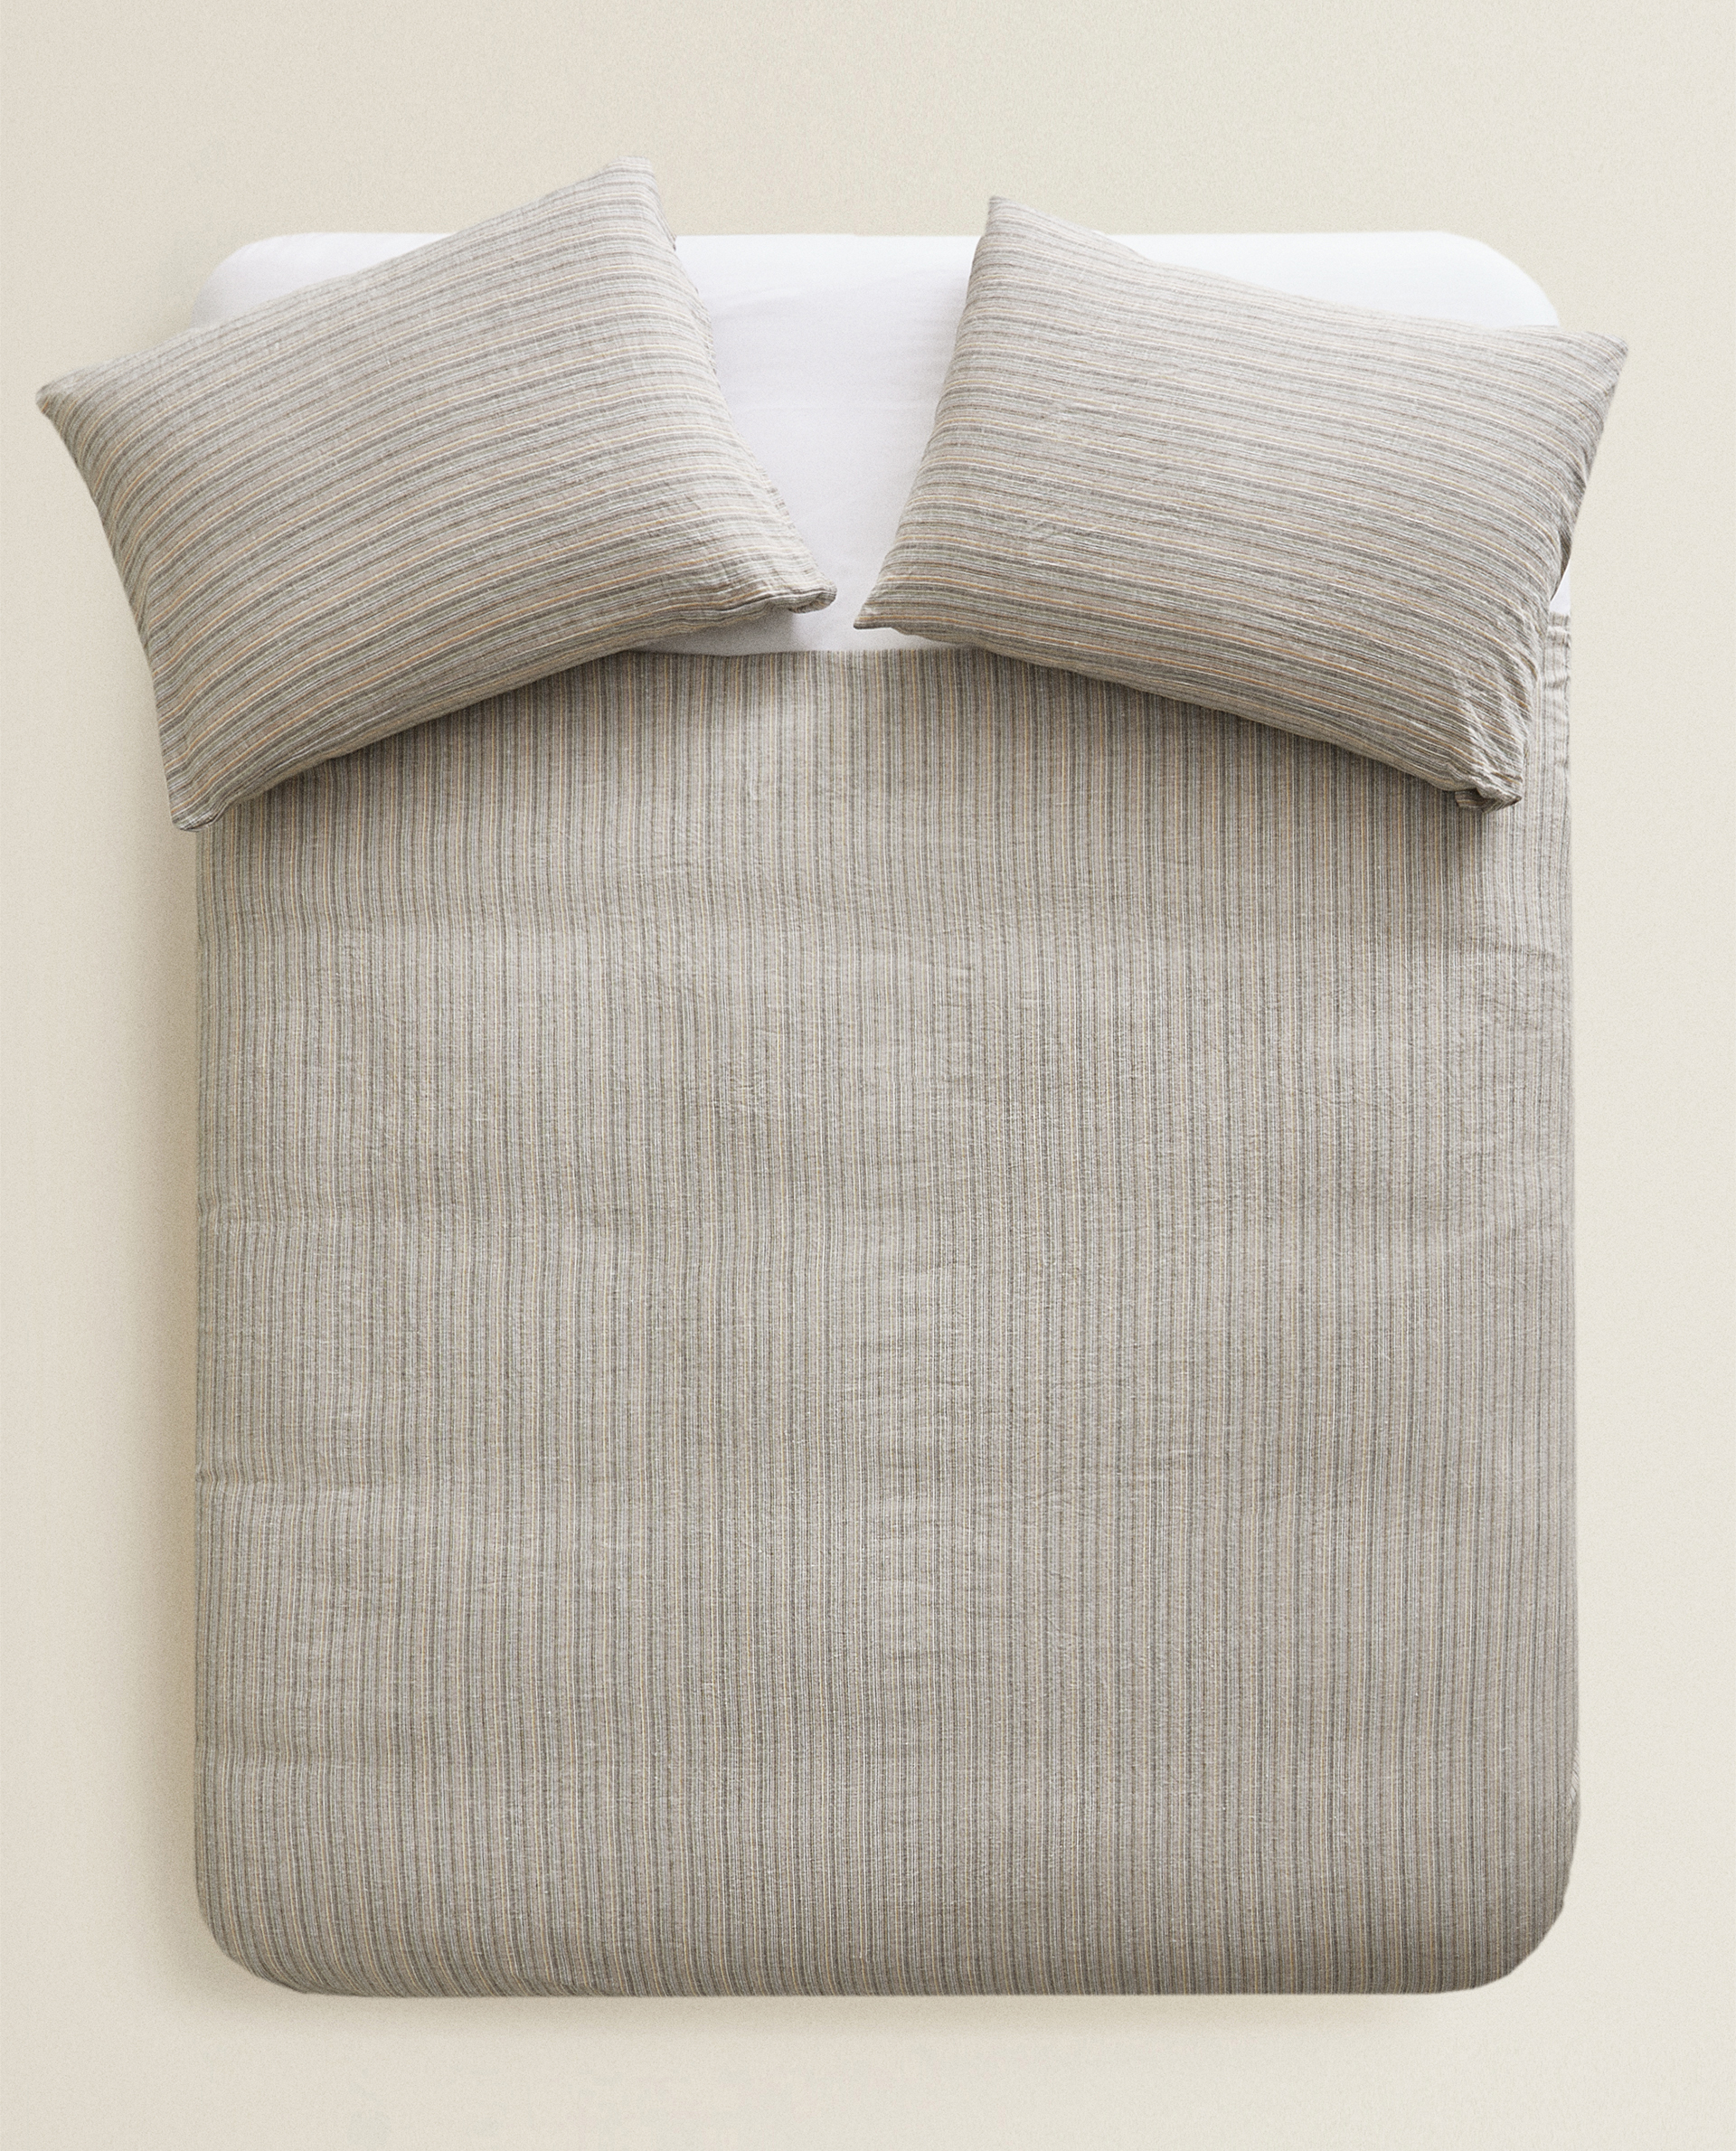 Duvet Cover With Multicoloured Stripes Duvet Covers Bed Linen